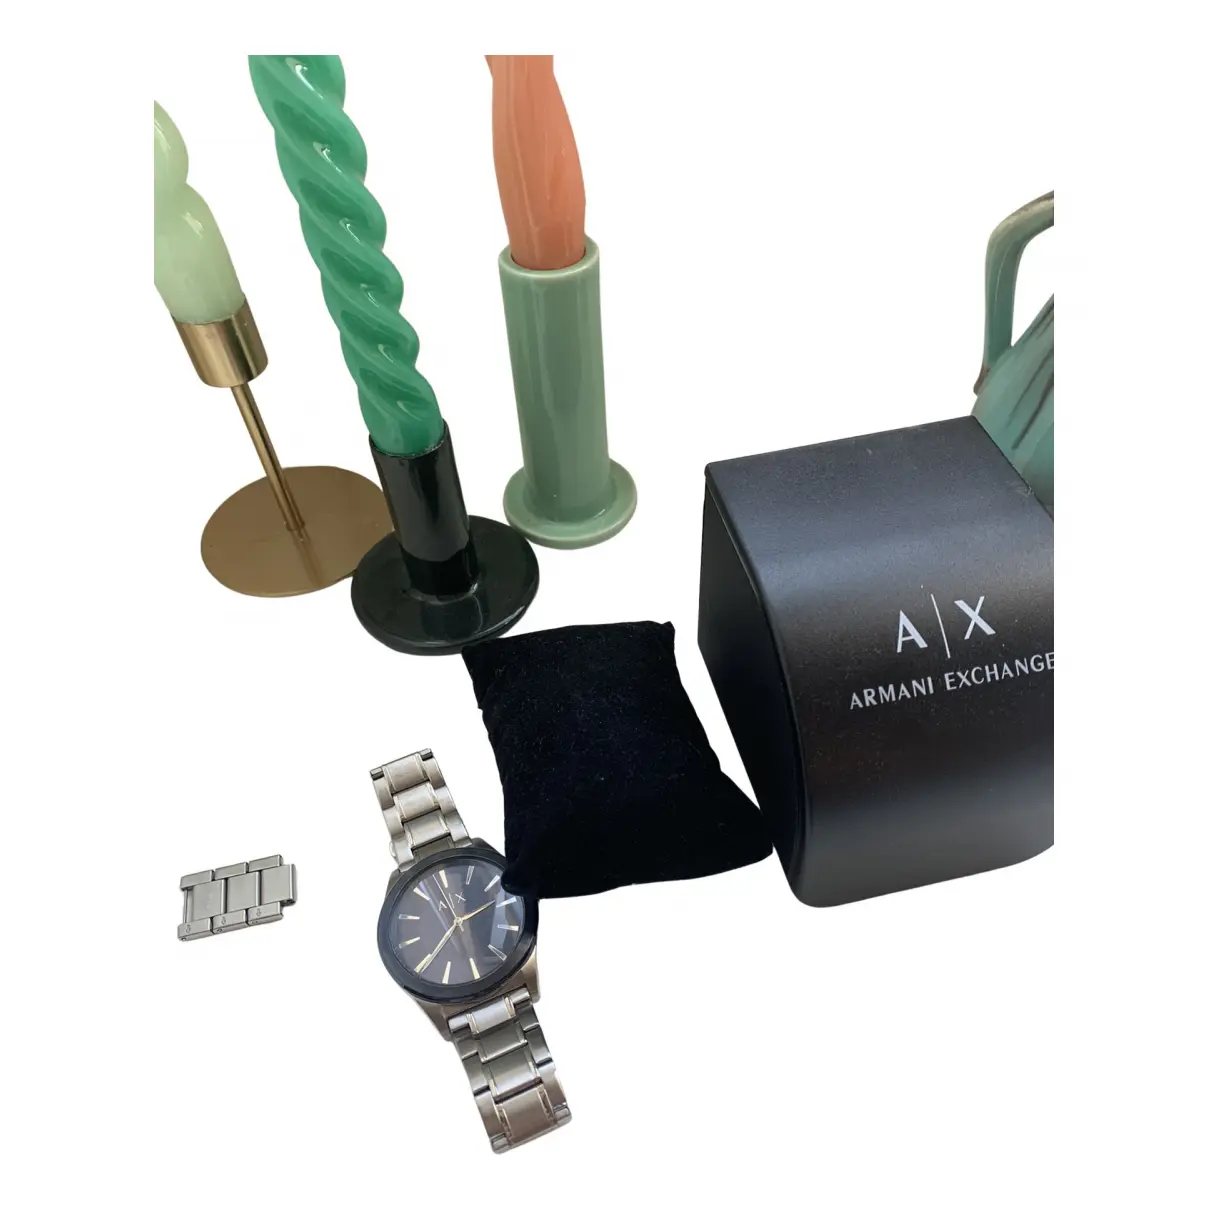 Buy Armani Exchange Watch online